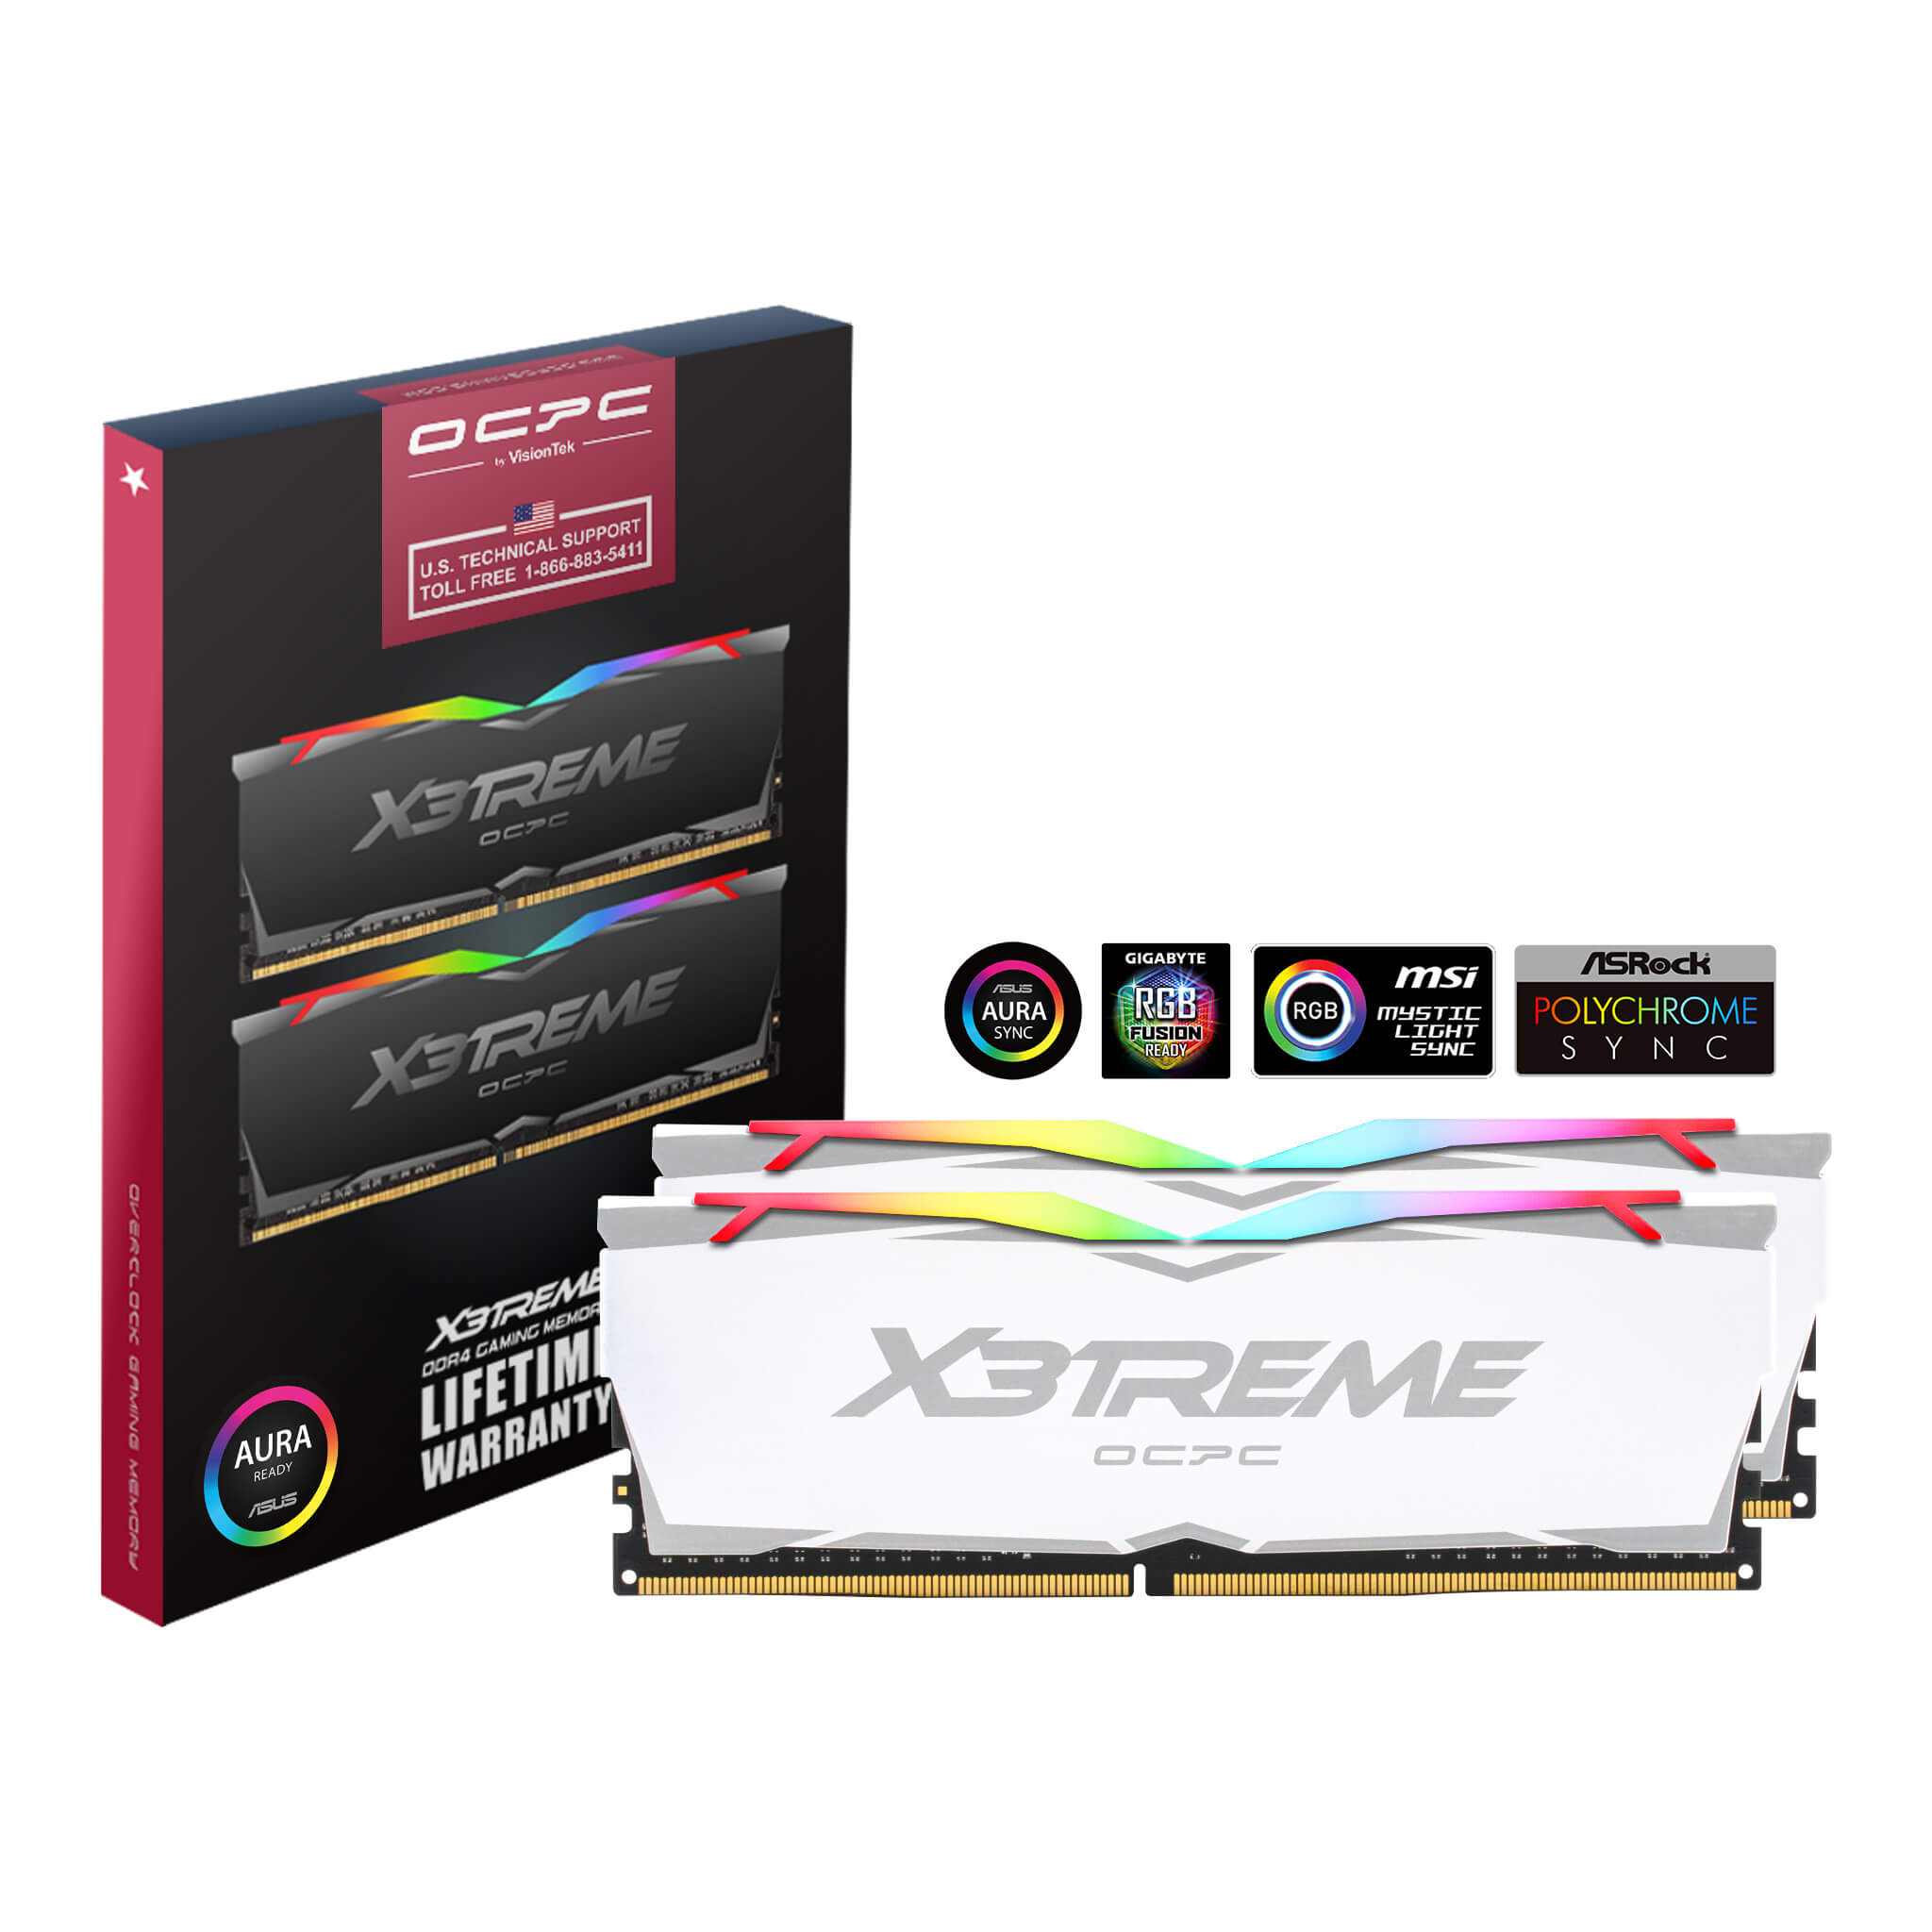 OCPC X3Treme Aura RGB DDR4 16GB Kit (2X8GB) - 3200MHz - CL16 - White